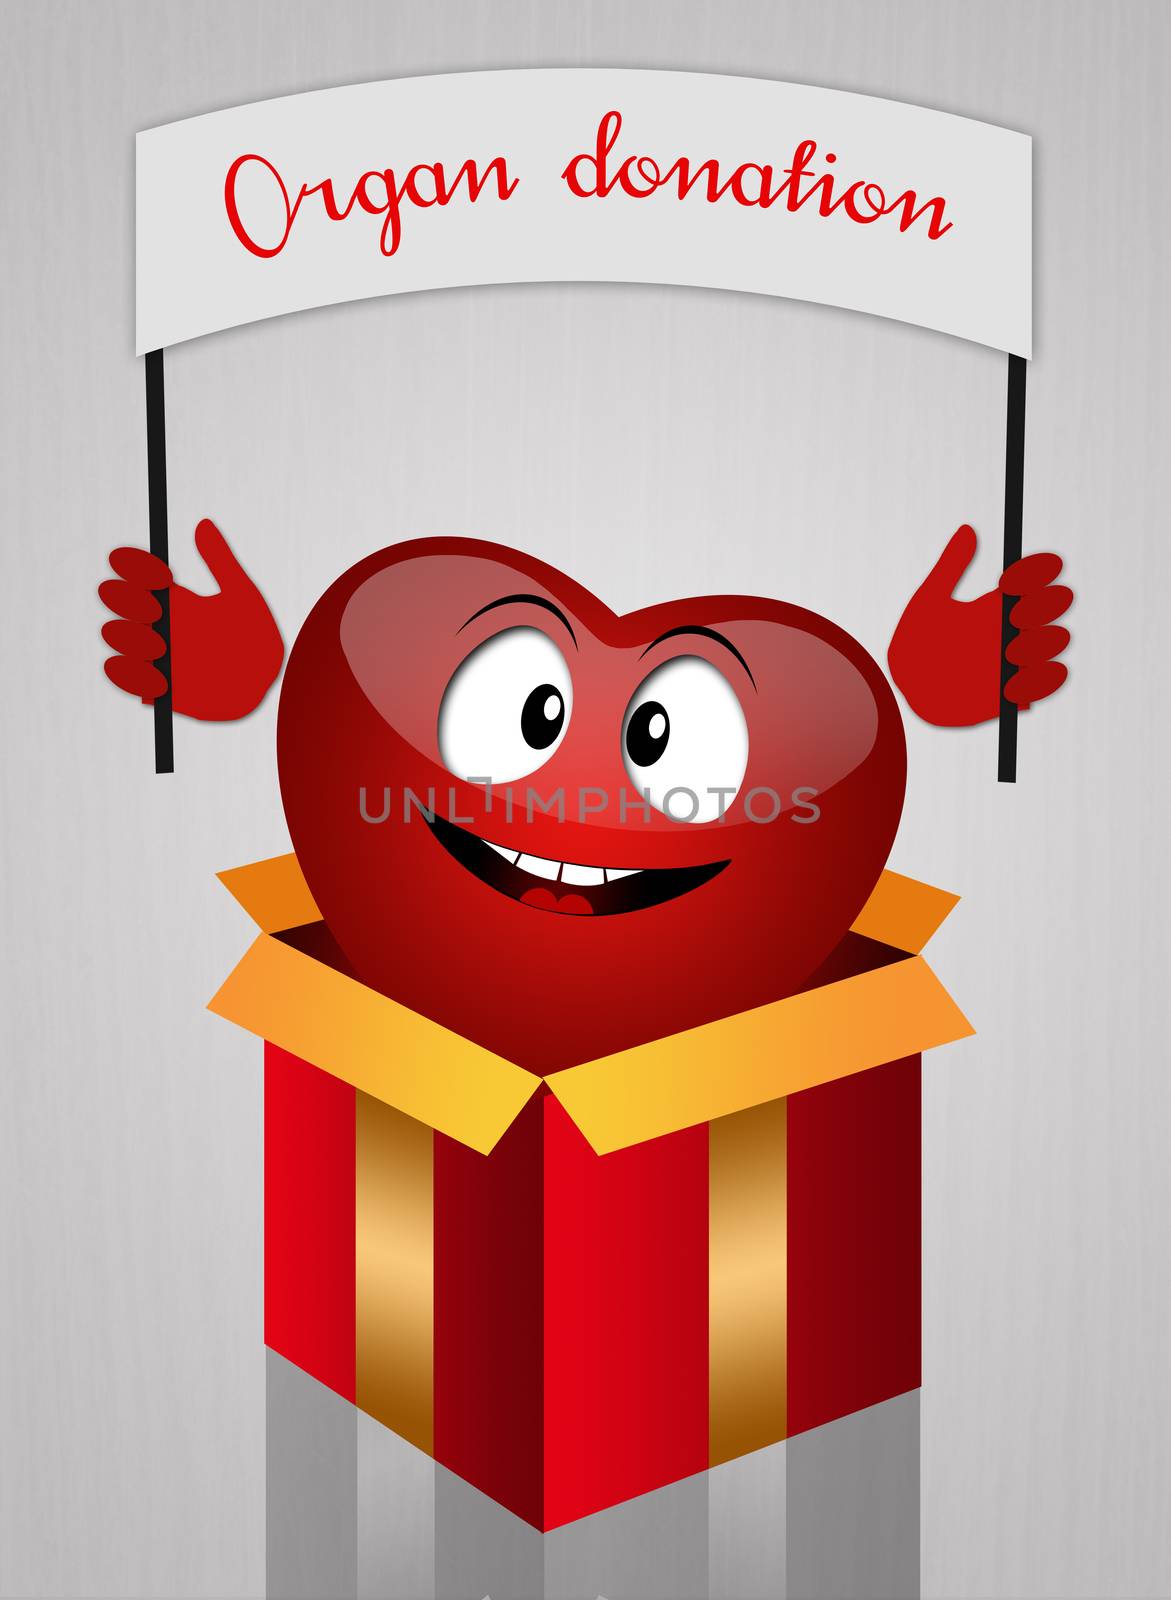 illustration of Funny heart for organ donation